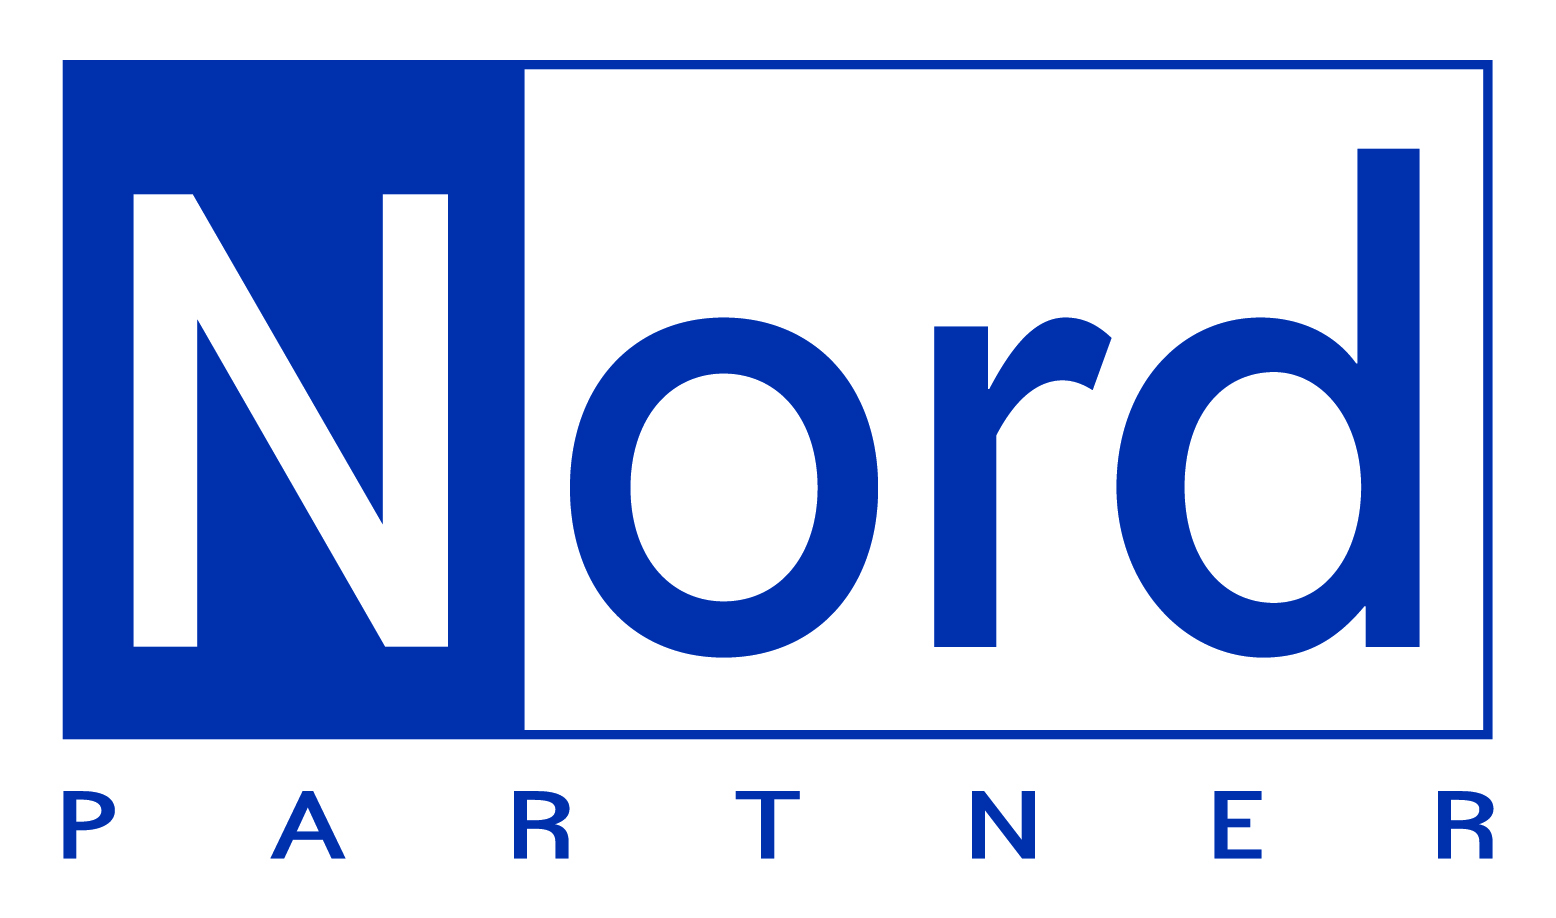 Nord Partner